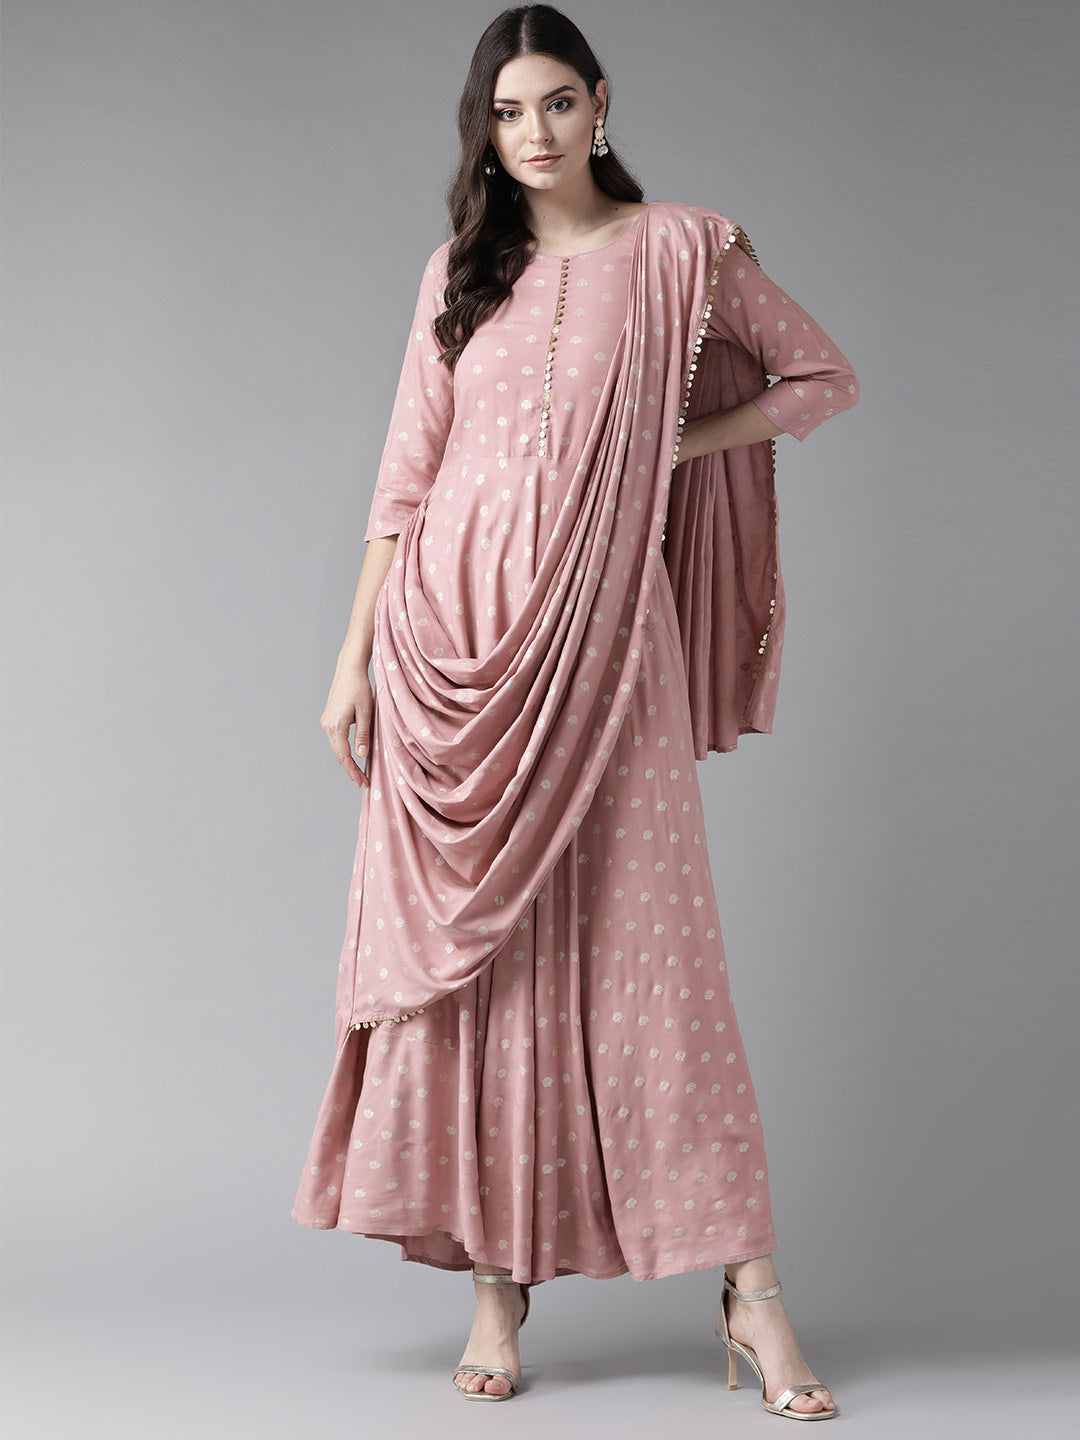 Designer Indian Anarkali Kurti With Attached Dupatta For Women, Anarkali  Gown | eBay